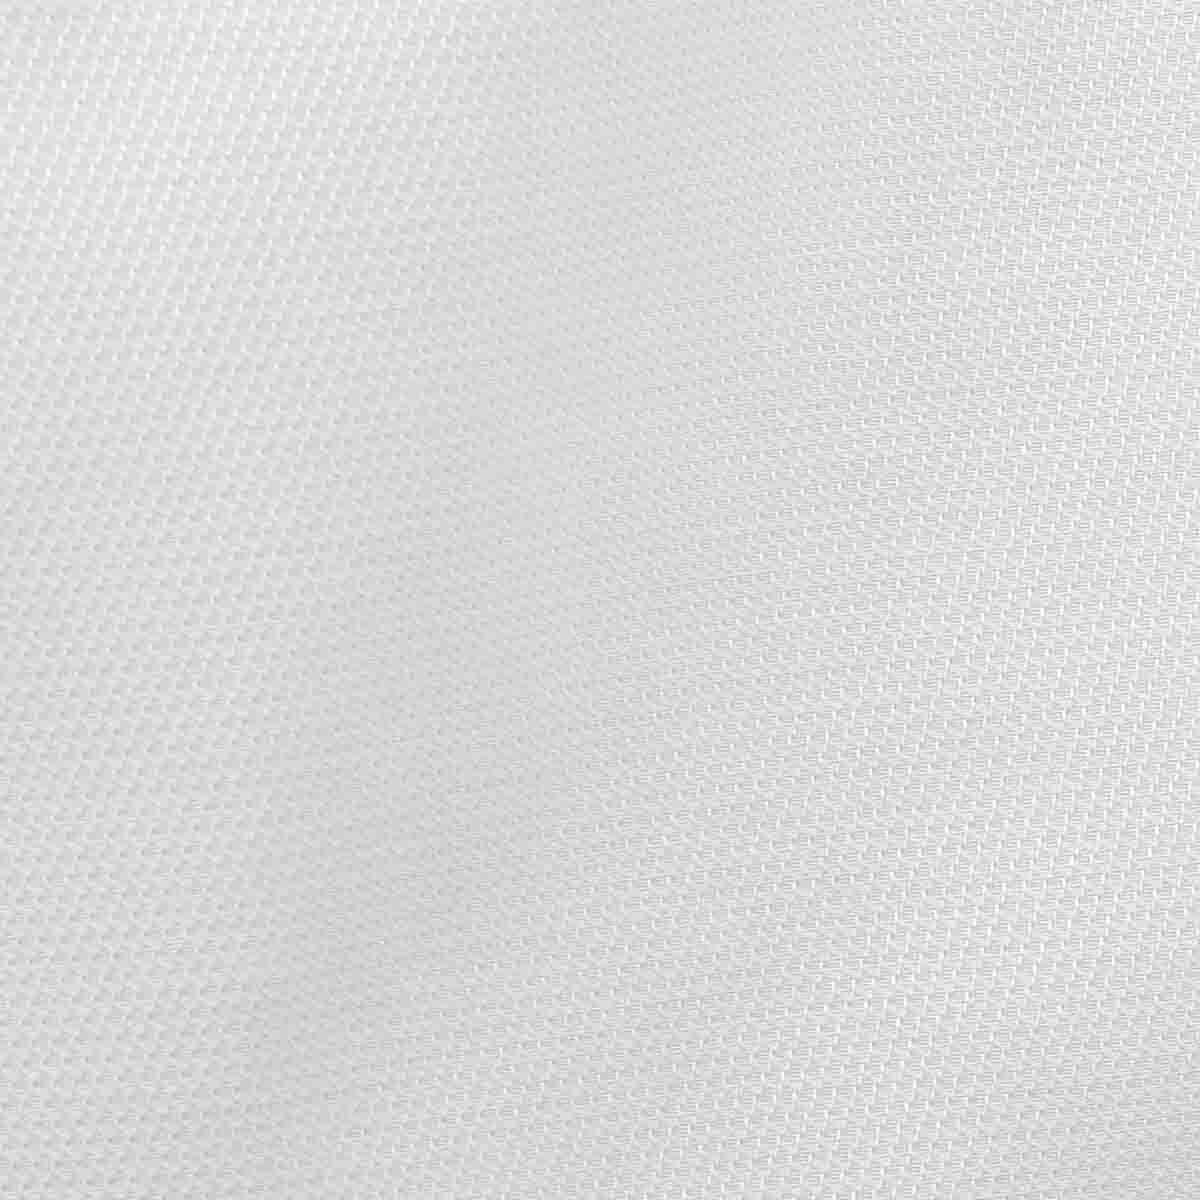 Camisa de Vestir Regular  Color Blanco Nina Ricci para Caballero